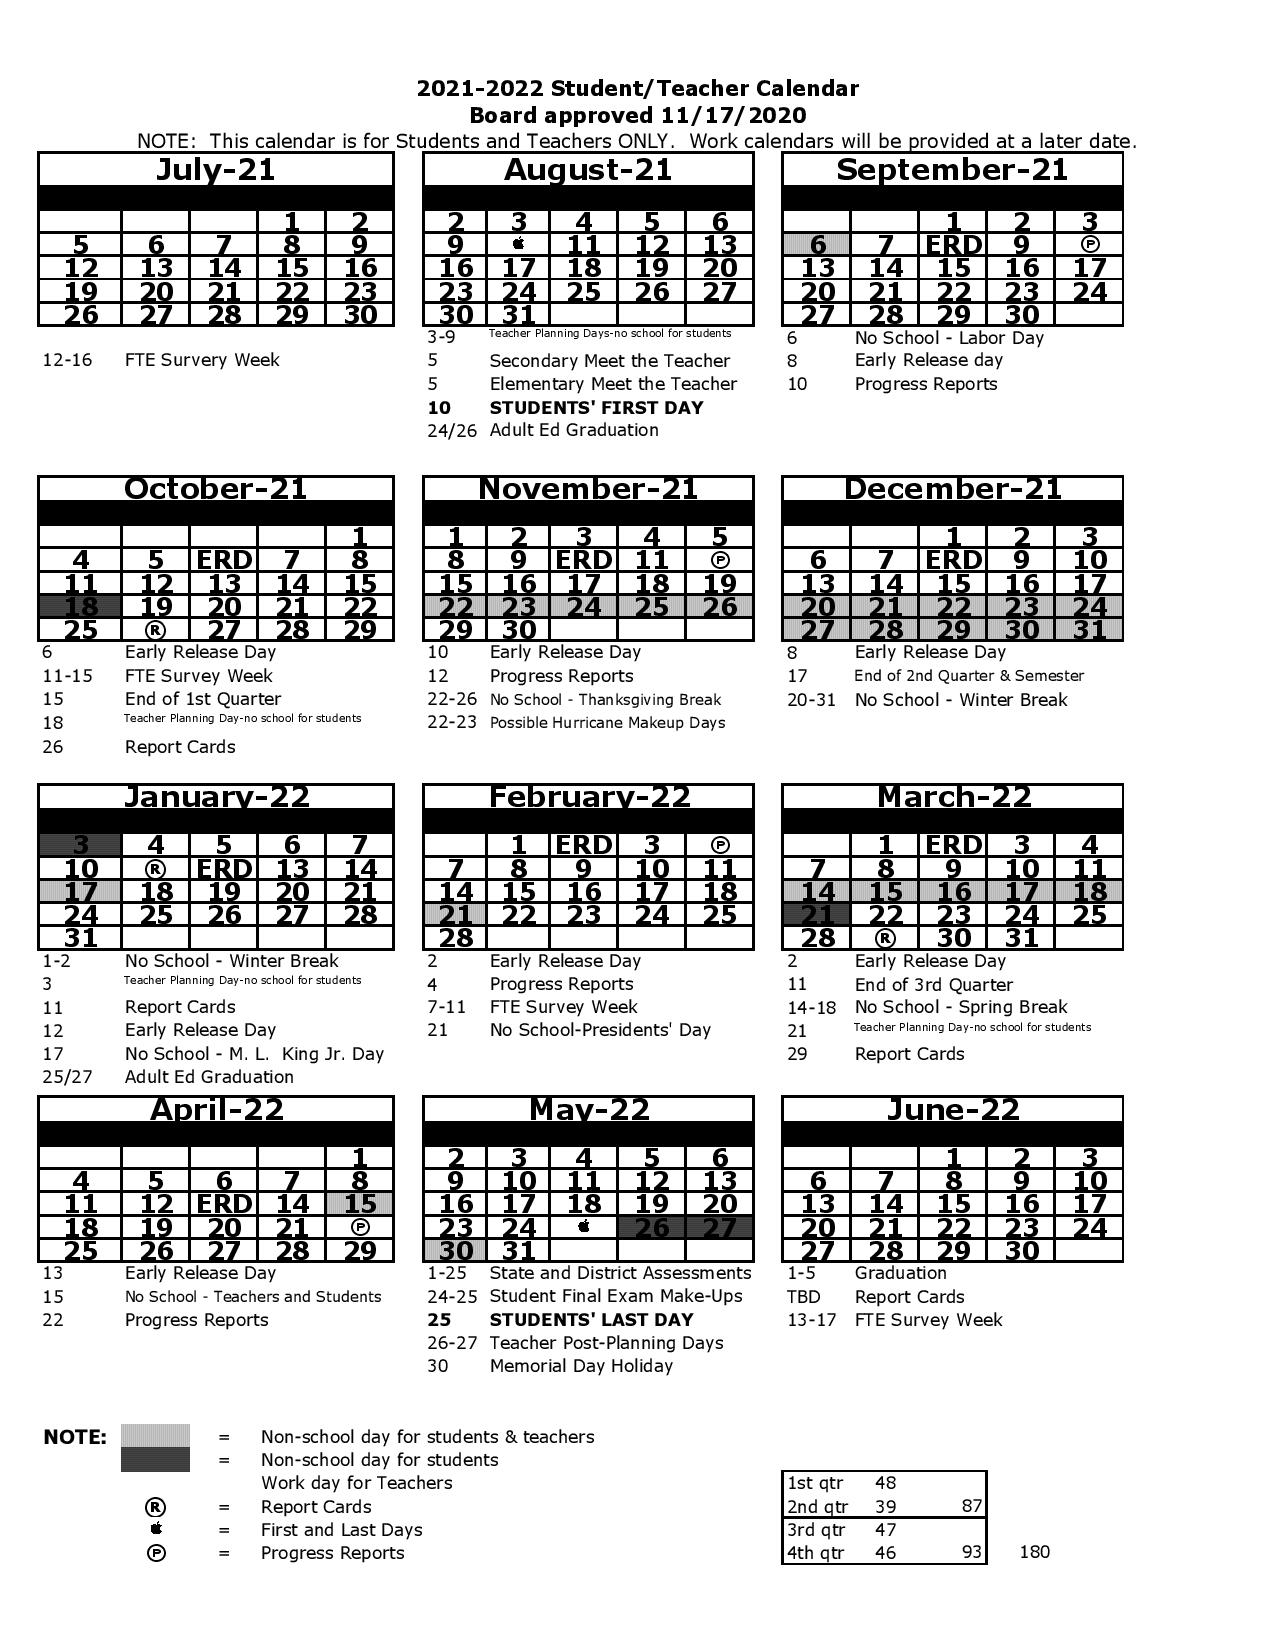 pasco-county-school-calendar-2021-2022-in-pdf